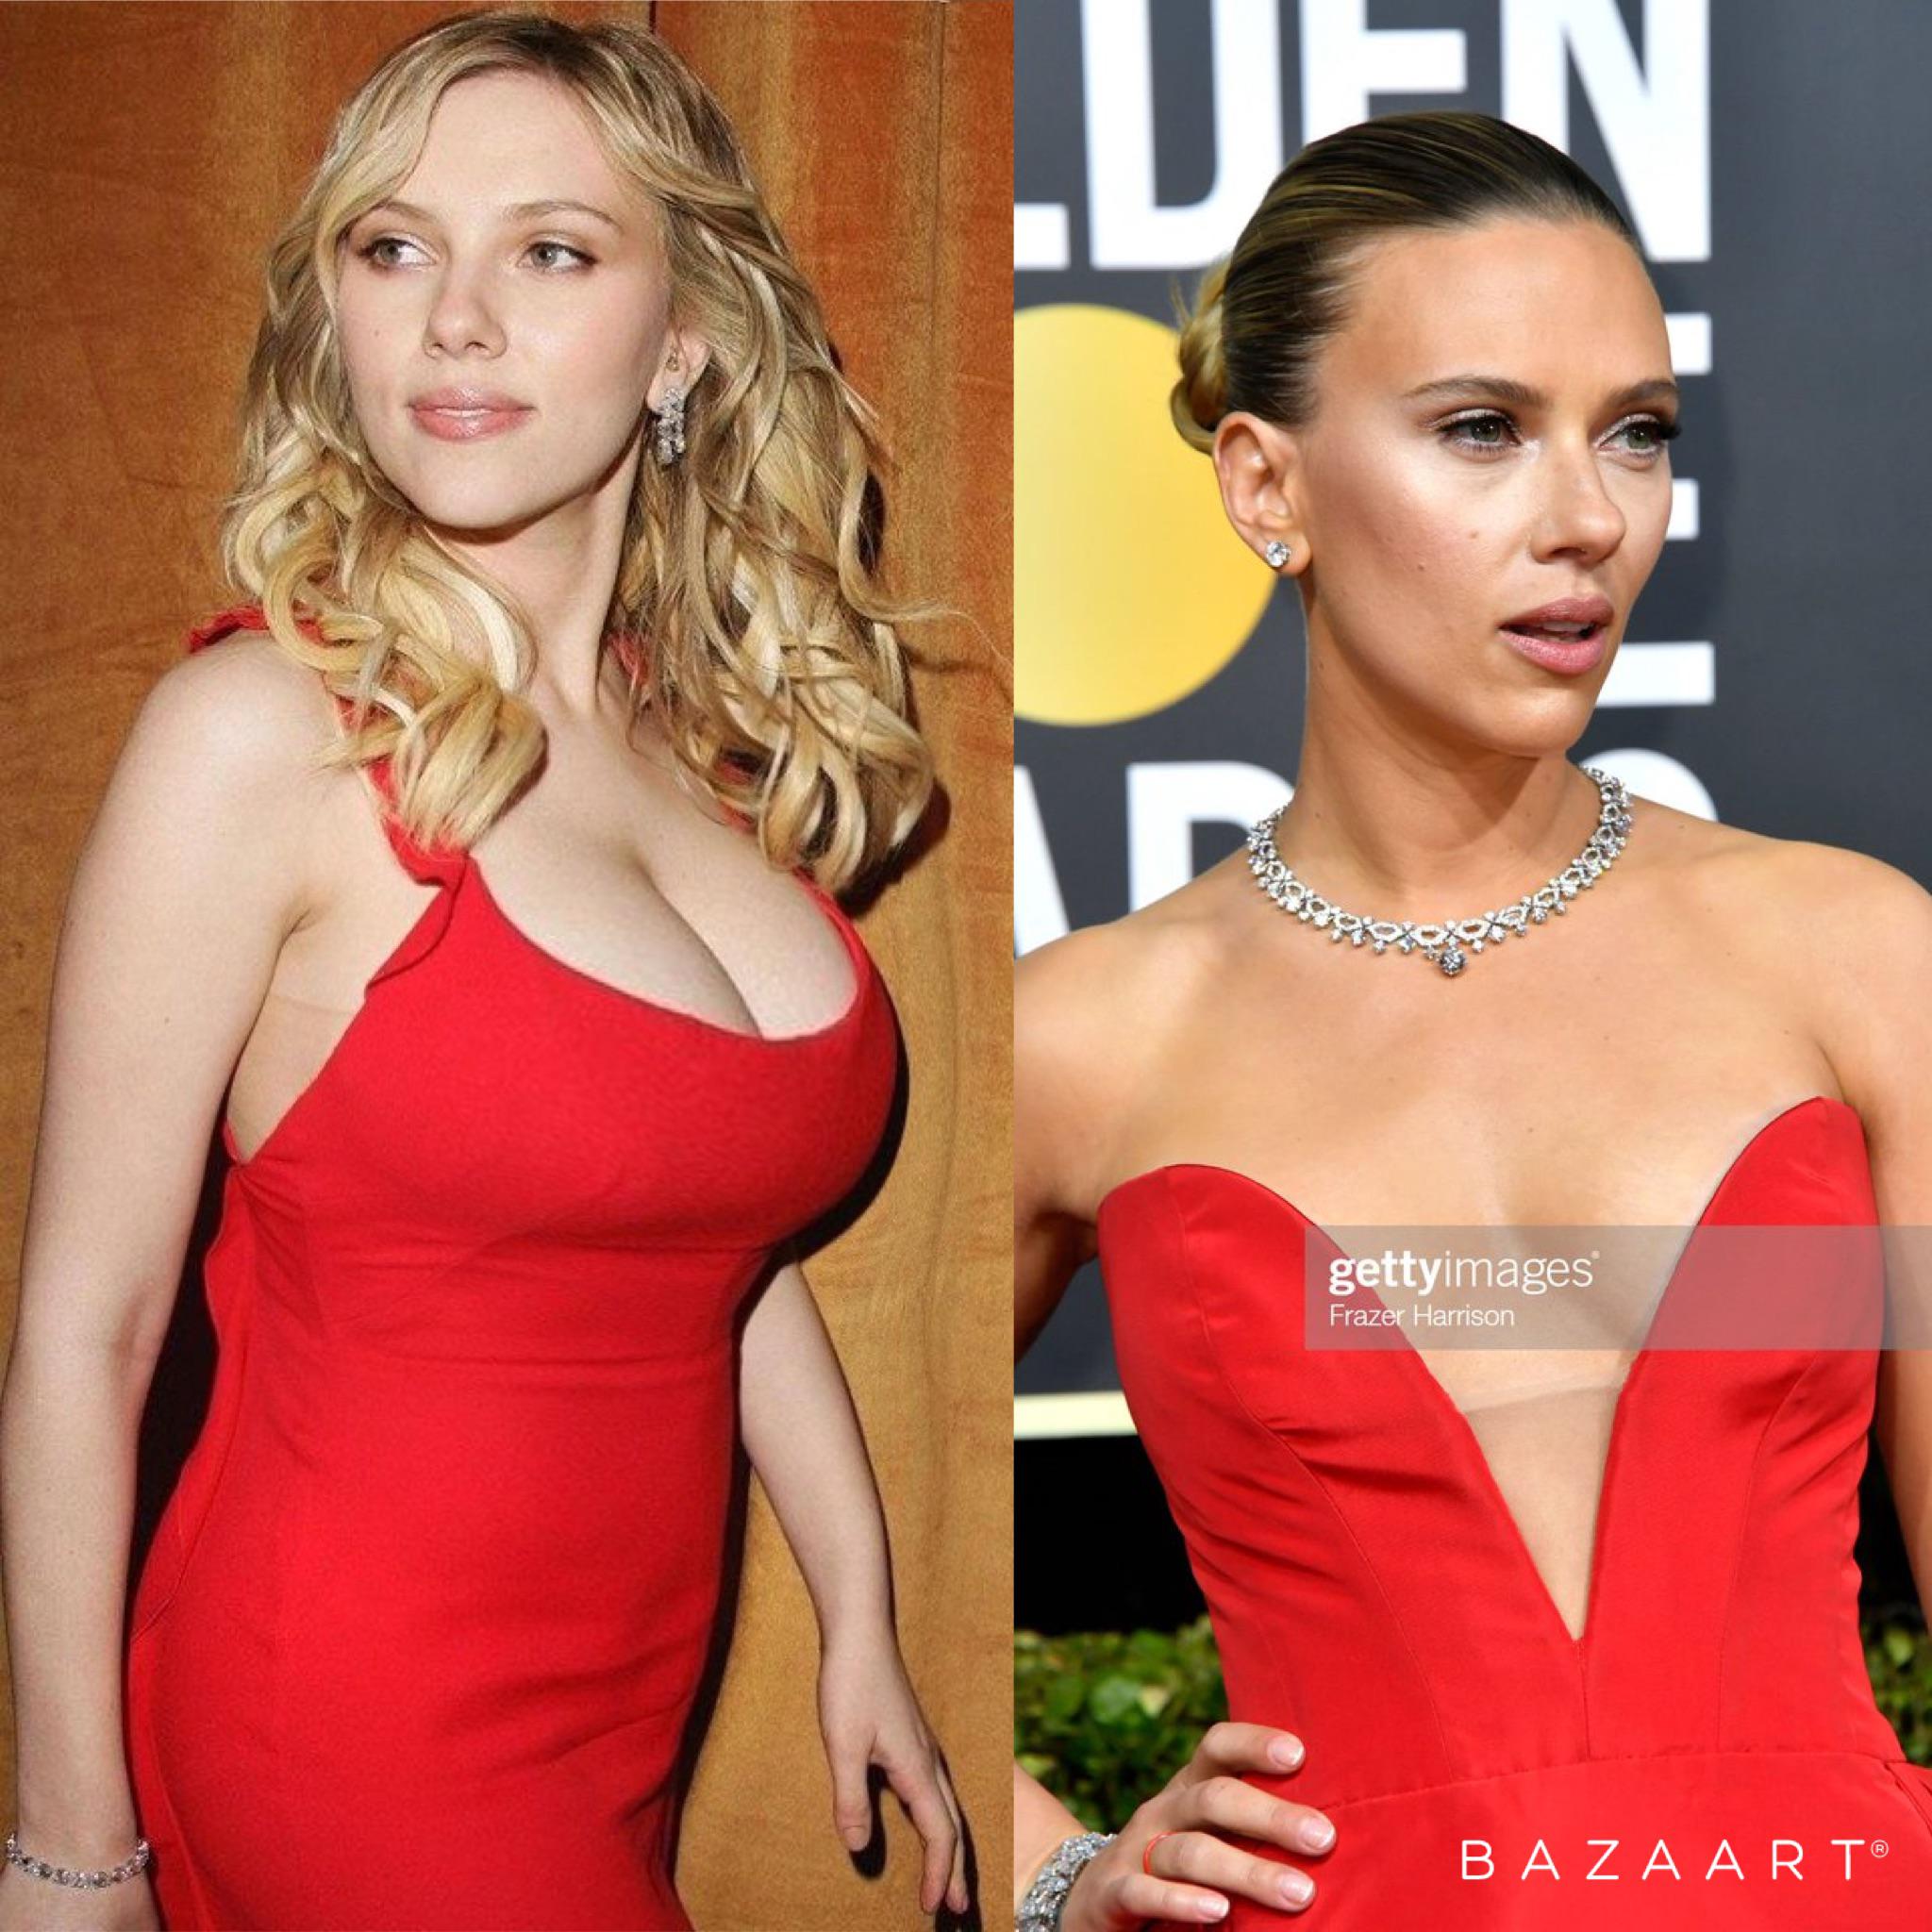 Scarlett Johansson - Do you guys prefer bigger or skinny? 11